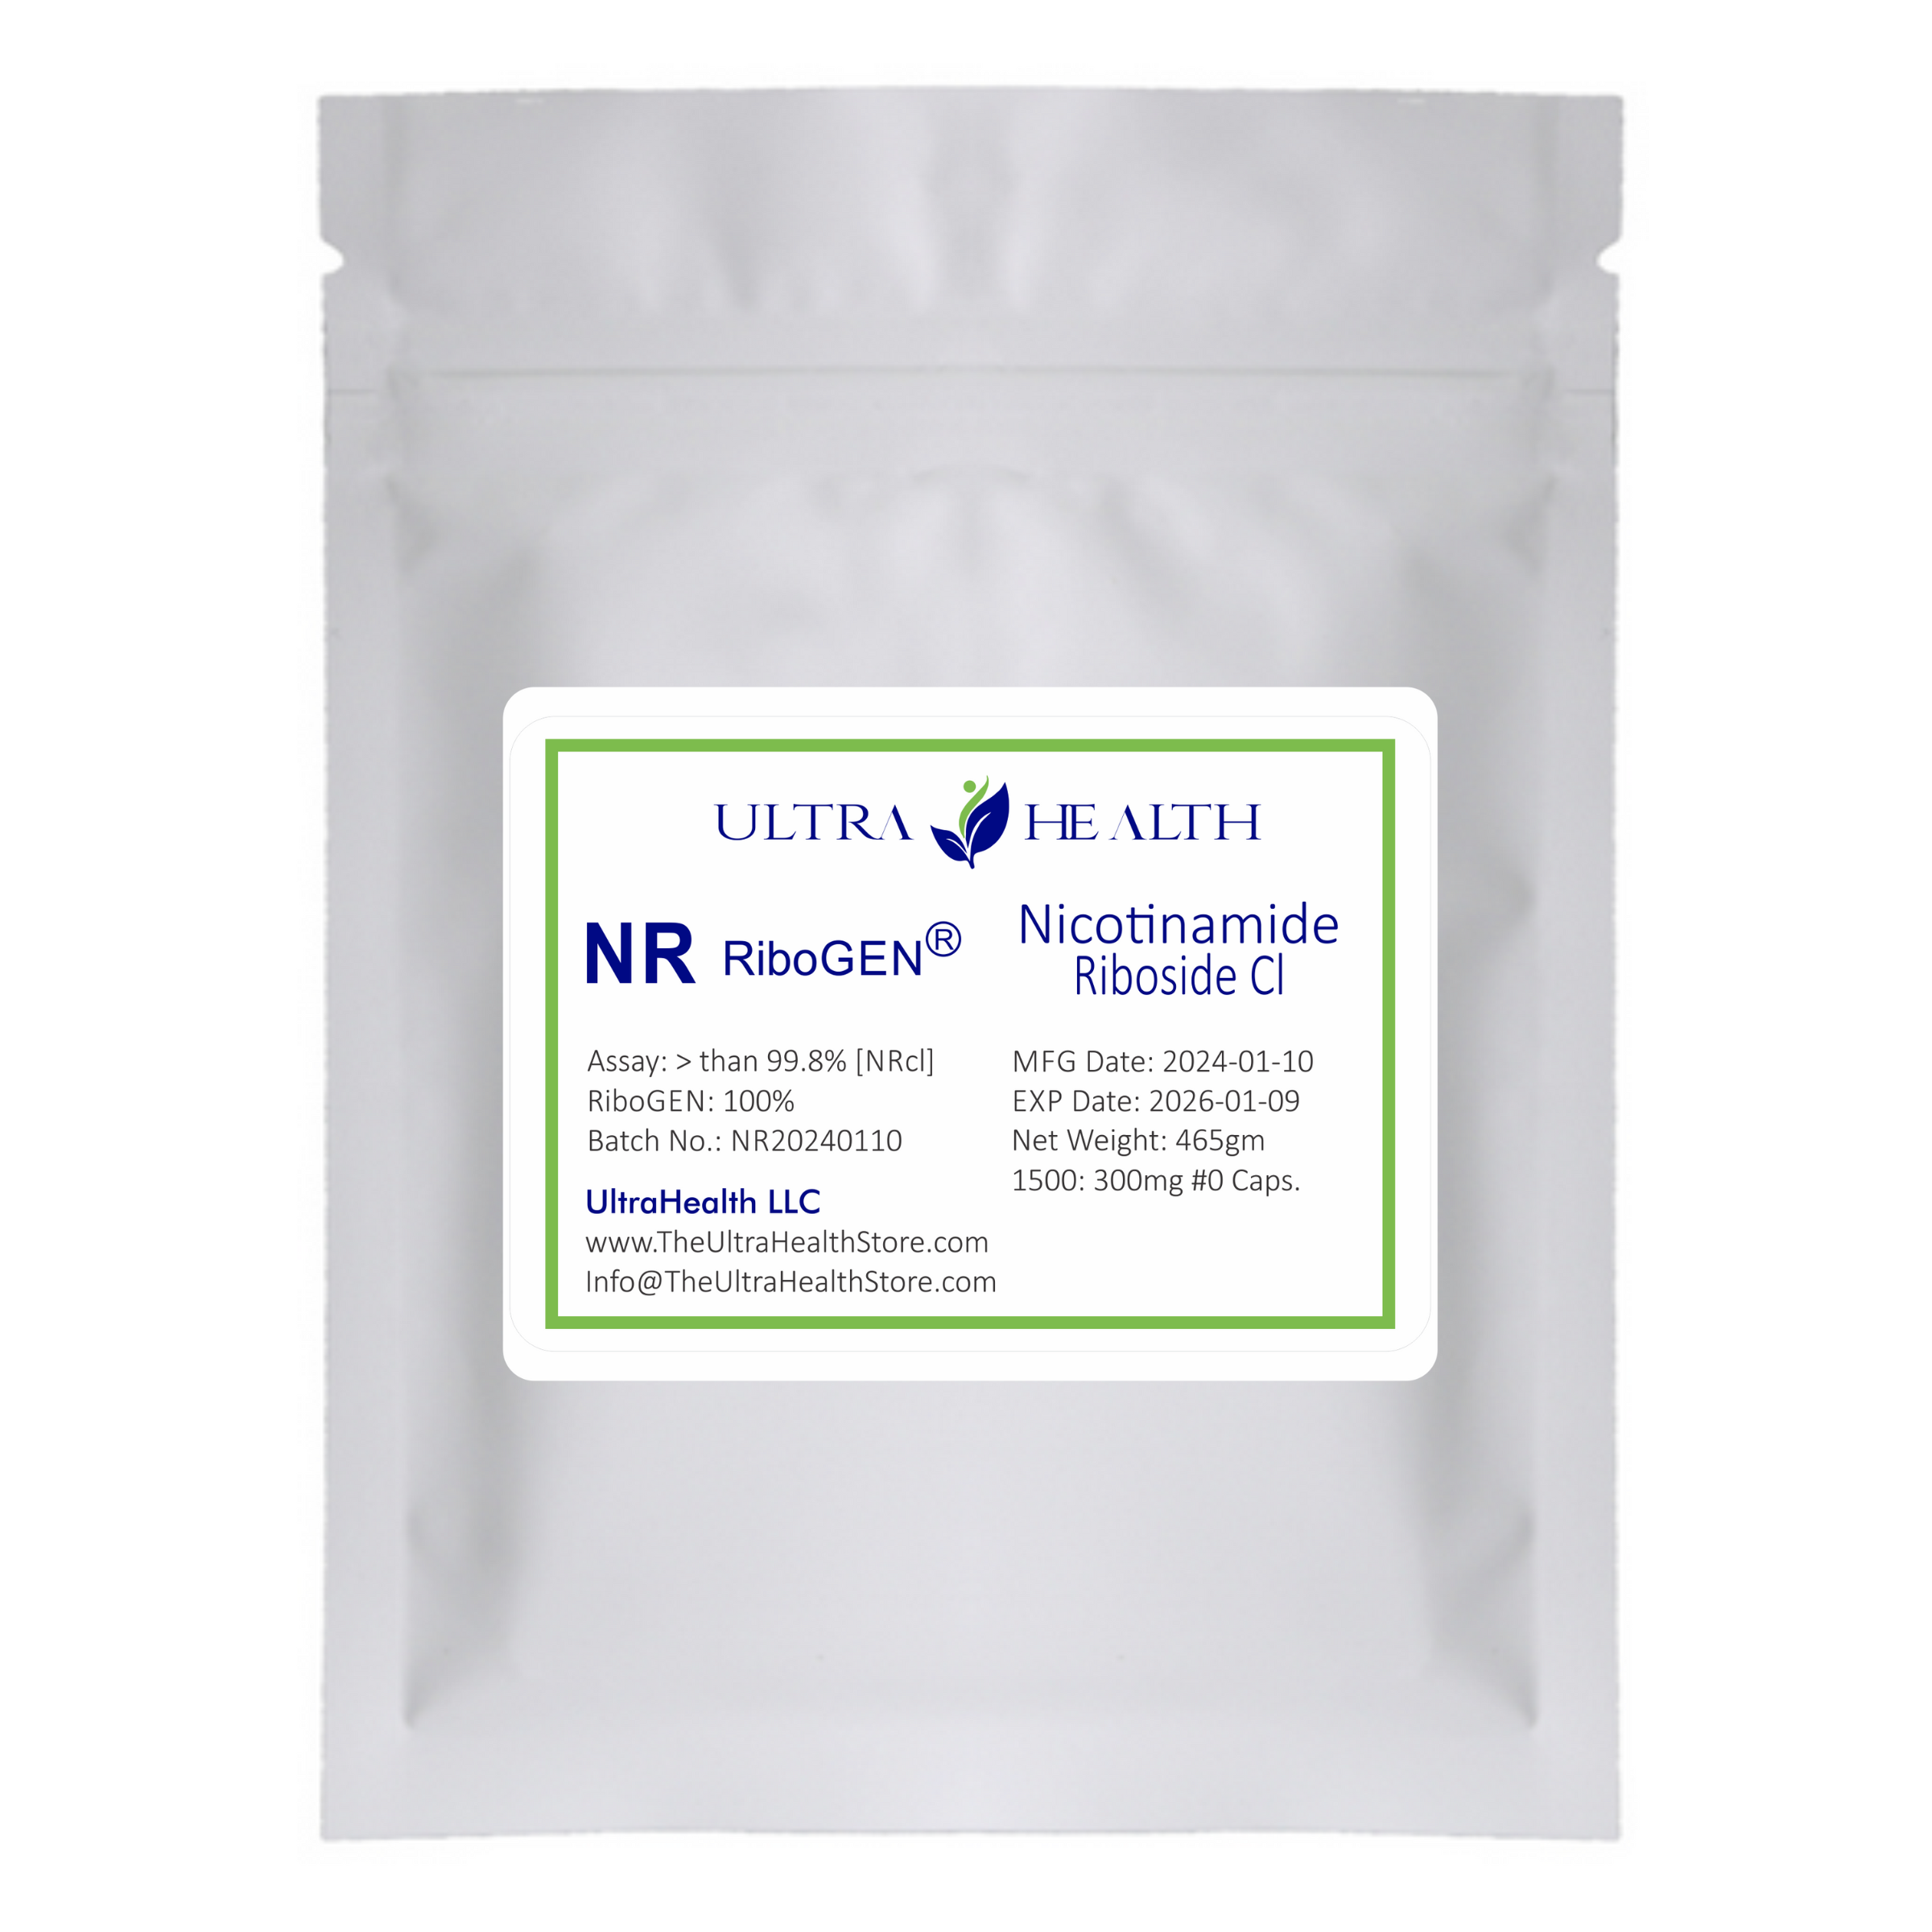 NR 1500C ENTERIC (1500 capsules), Nicotinamide Riboside (100% RiboGEN) 300mg Vegetarian Capsules for Private Label Supplements